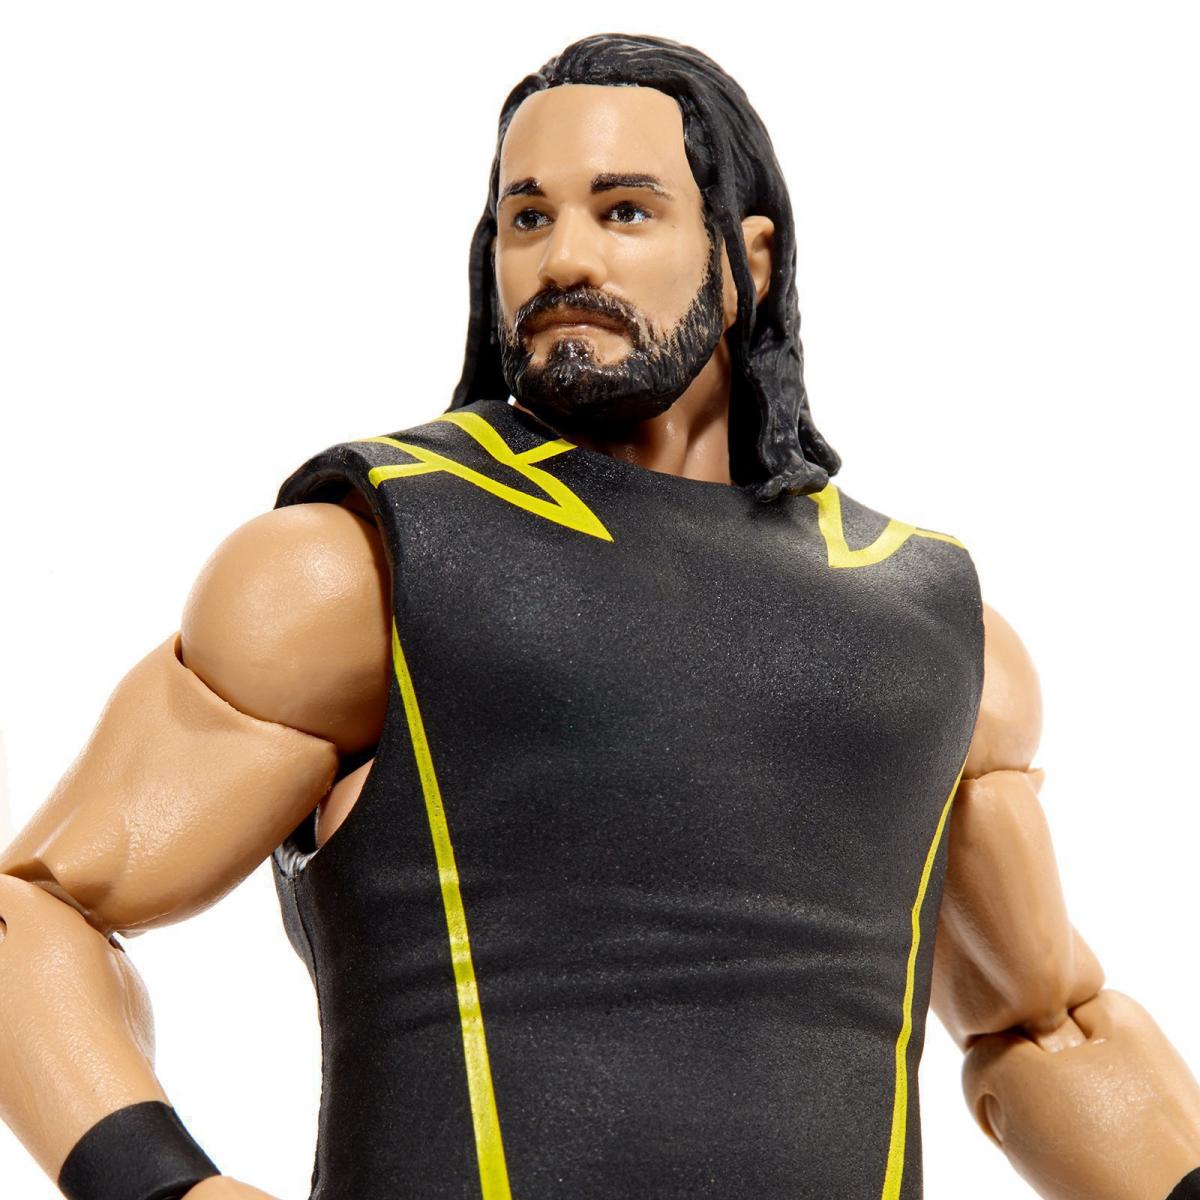 2020 WWE Mattel Elite Collection Top Picks Seth Rollins